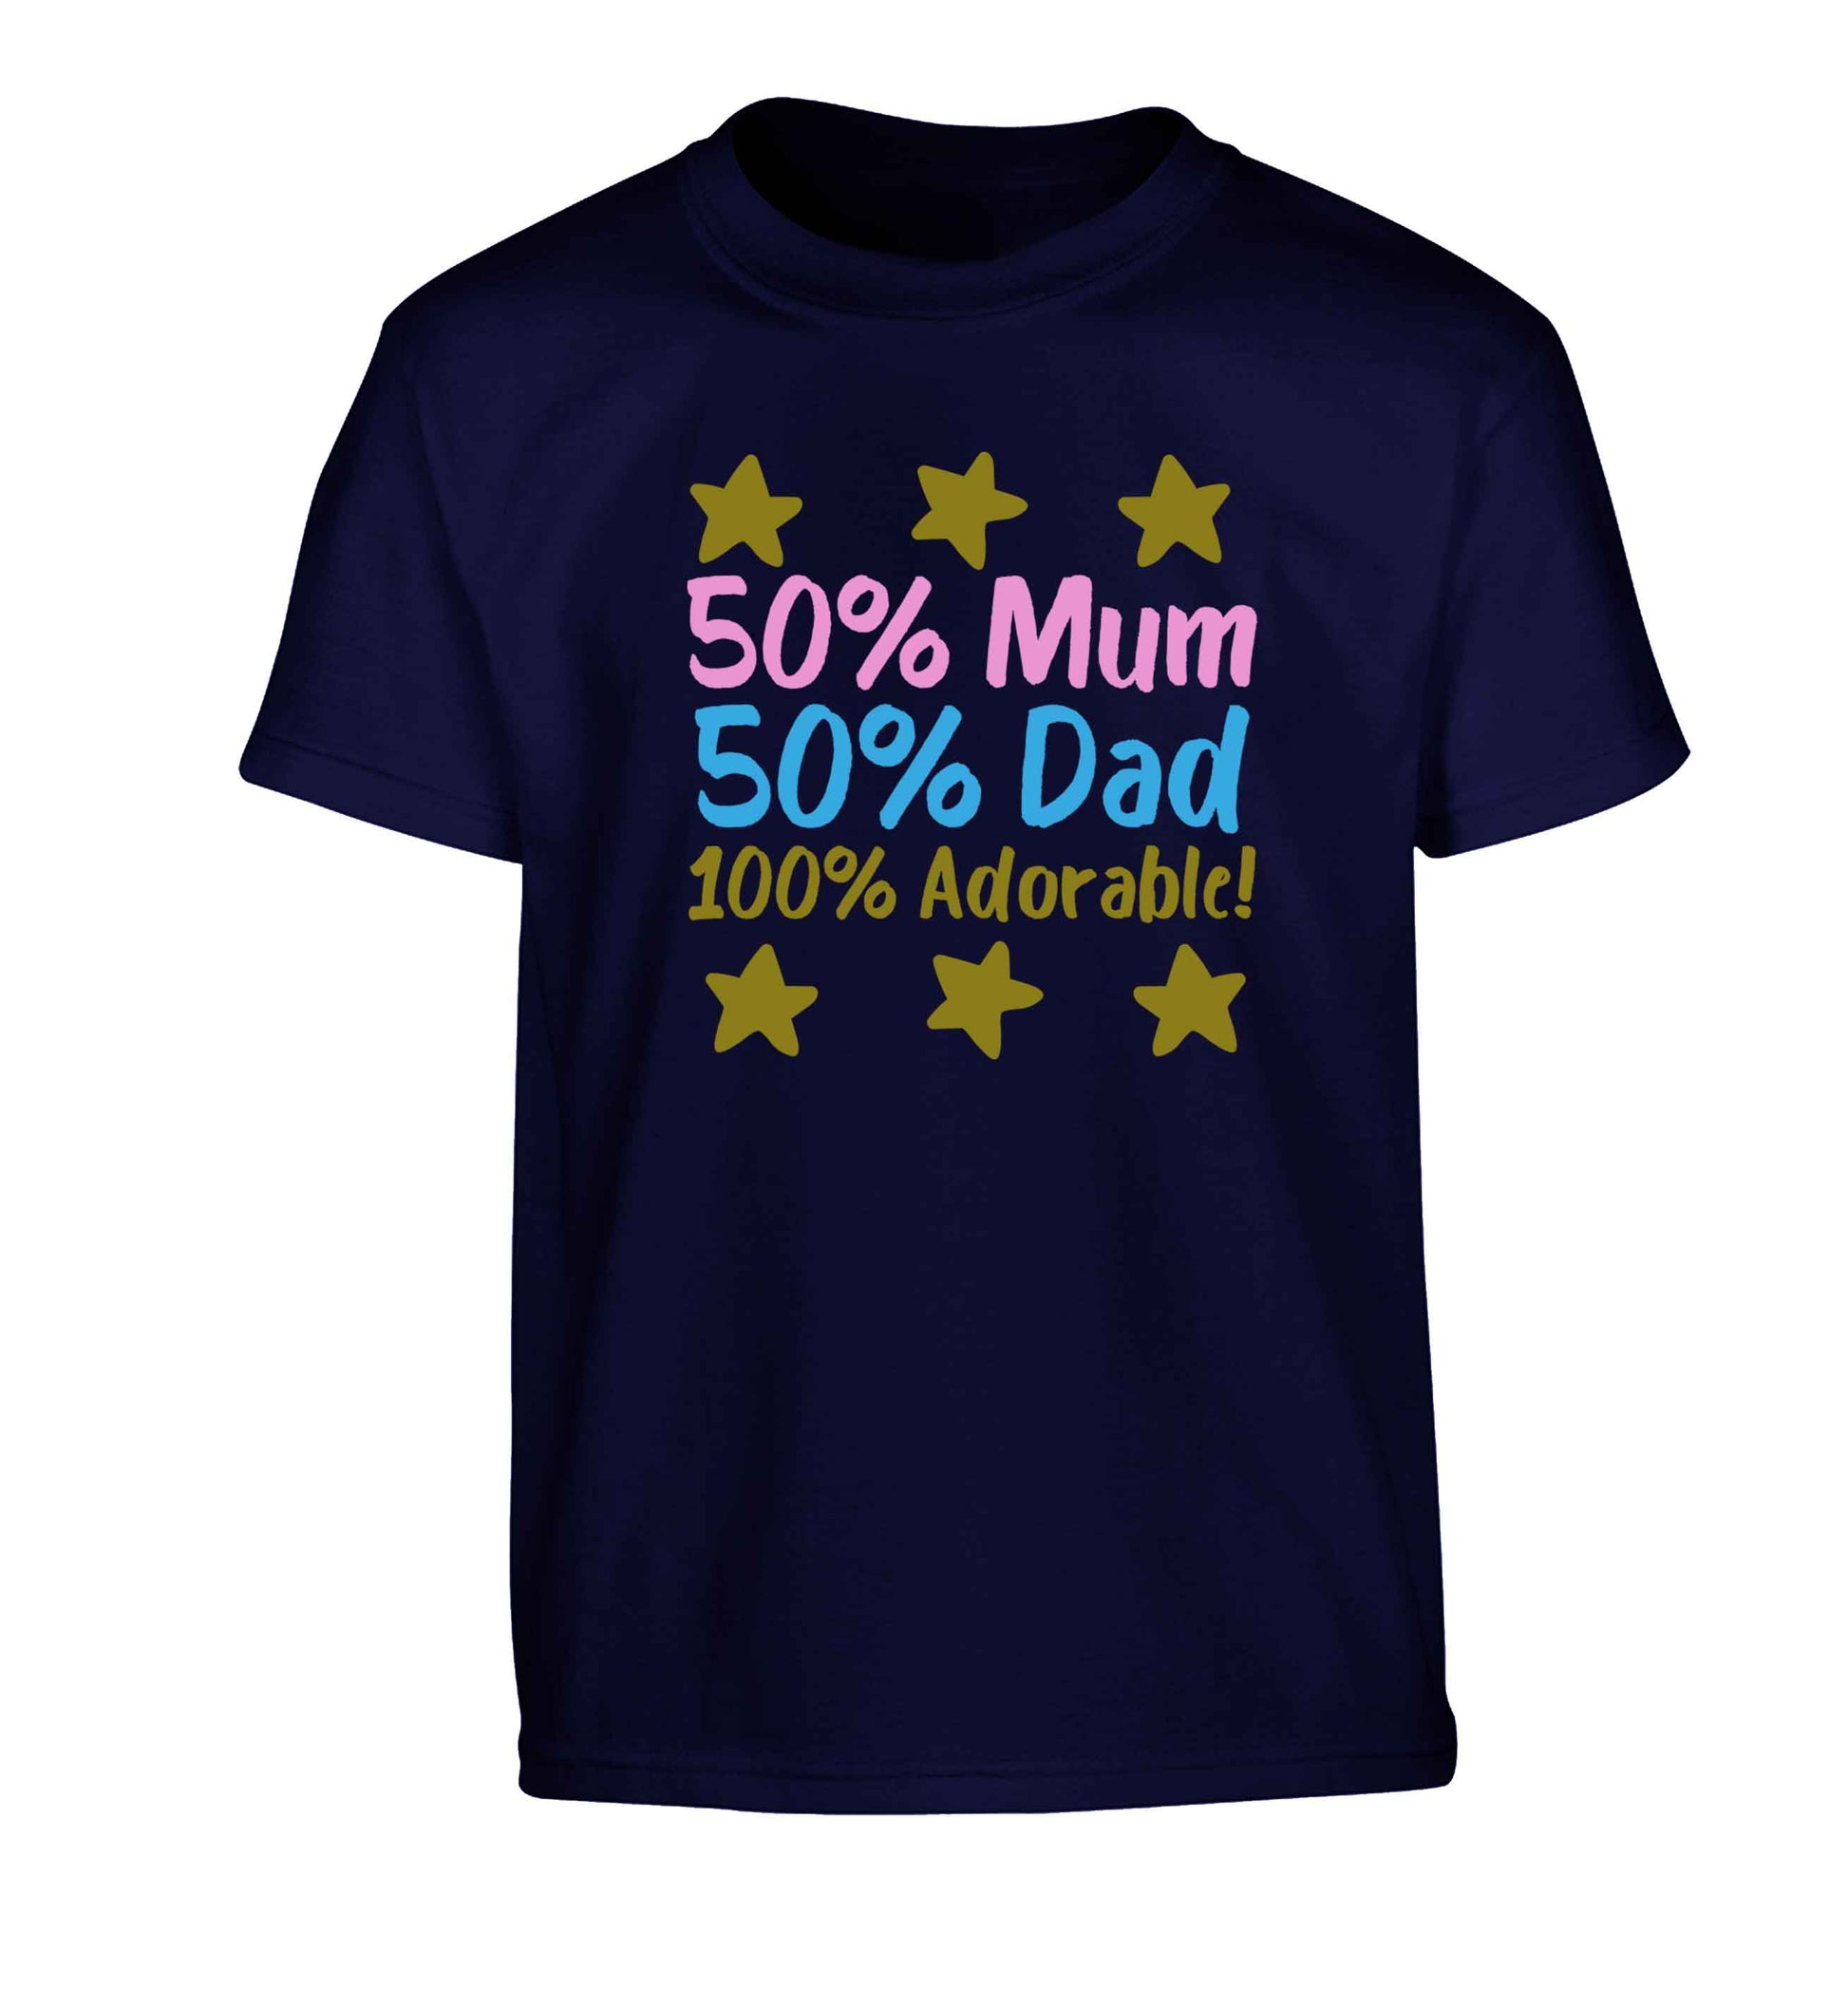 50% mum 50% dad 100% adorable Children's navy Tshirt 12-13 Years